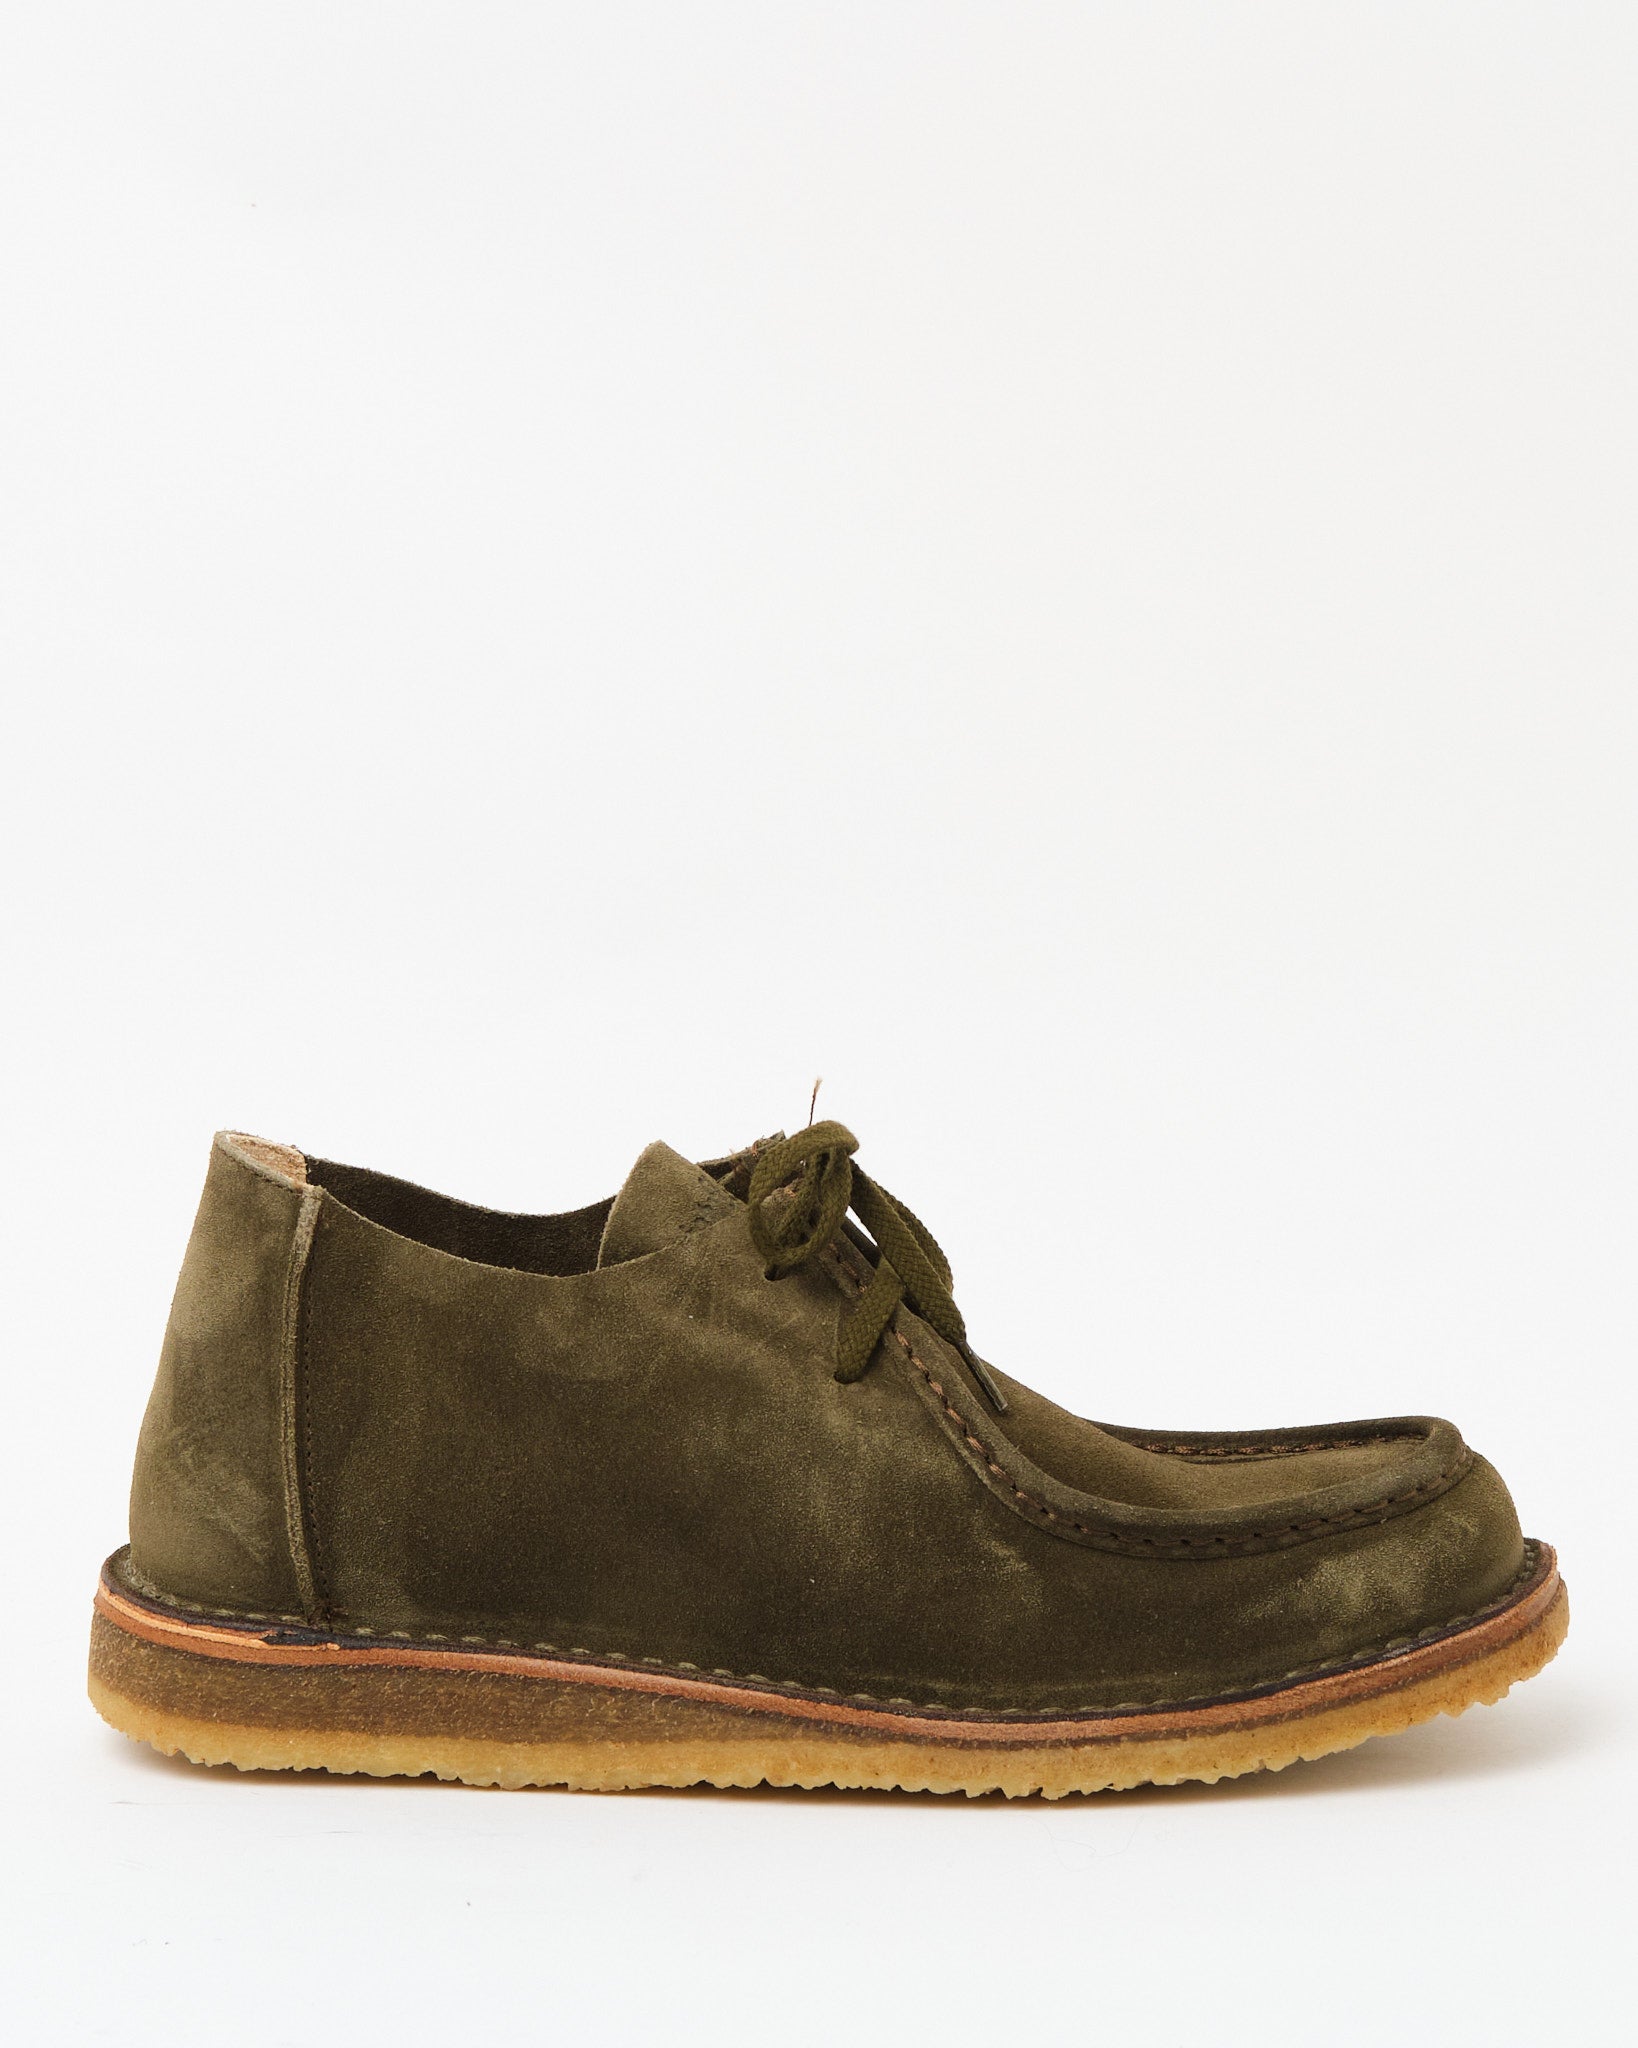 Astorflex SS20 Footwear: Italian-Made Masterpieces - Yards Store Menswear